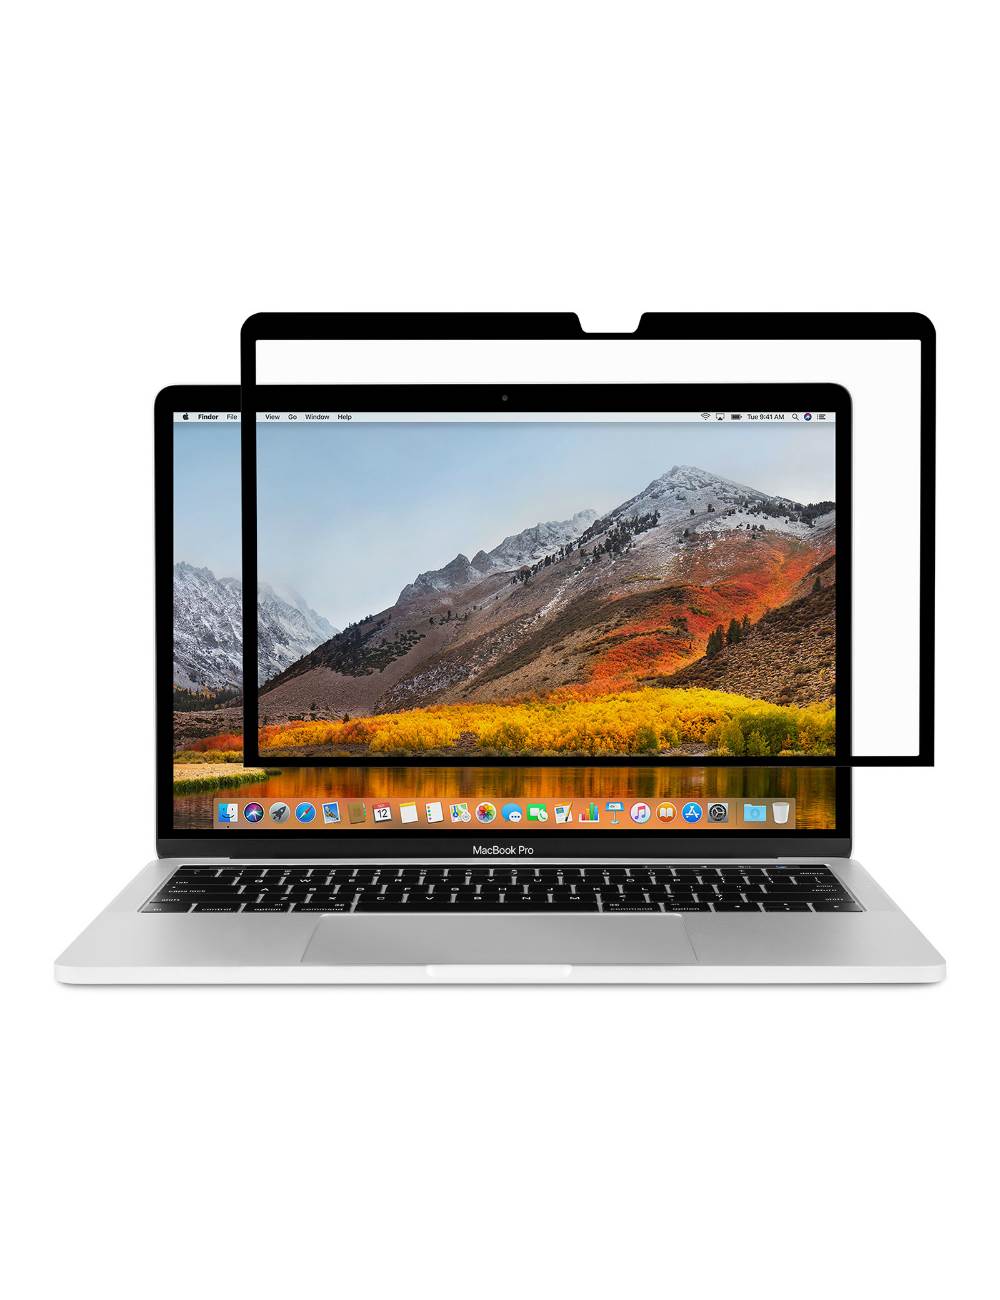 best macbook pro privacy screen